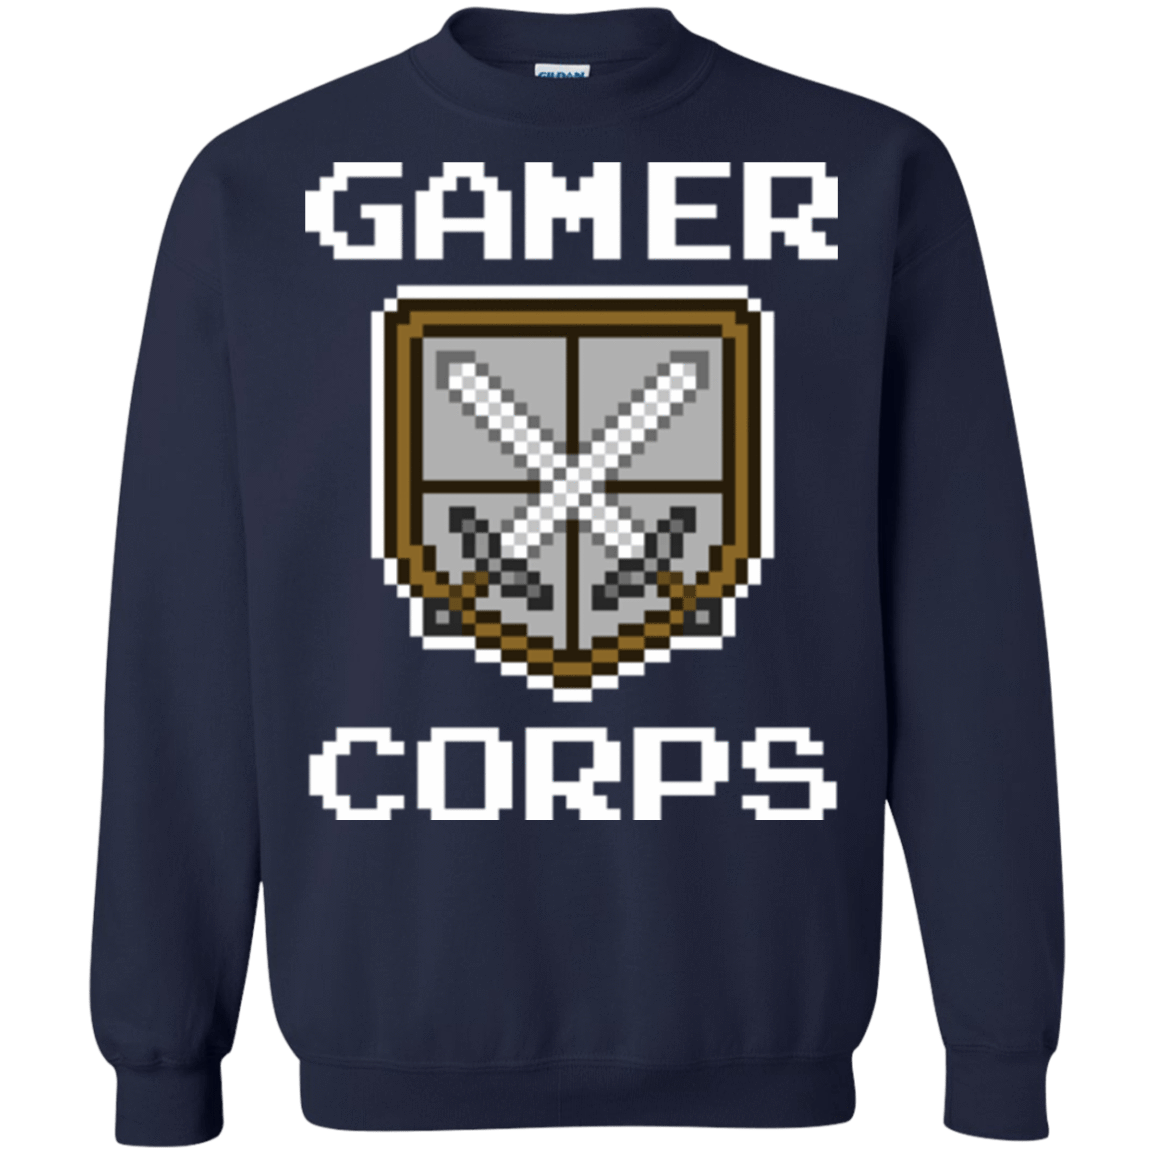 Sweatshirts Navy / Small Gamer corps Crewneck Sweatshirt